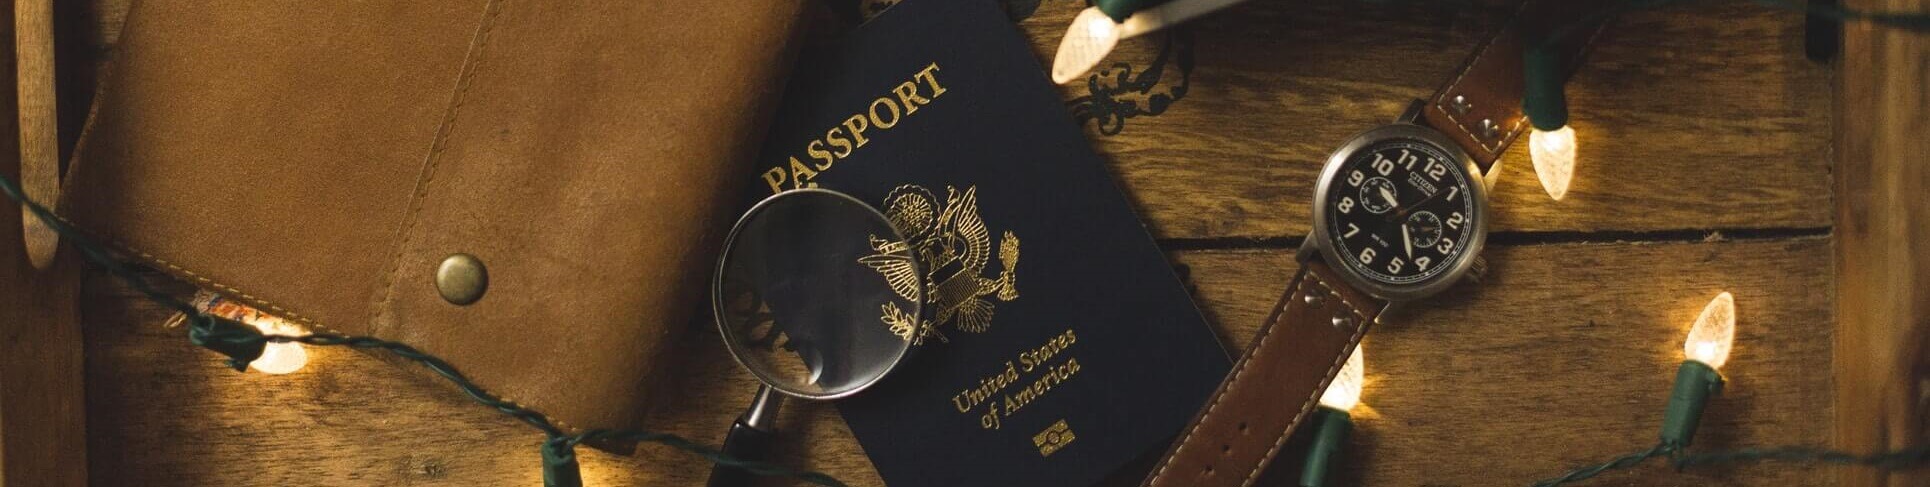 dual passport header